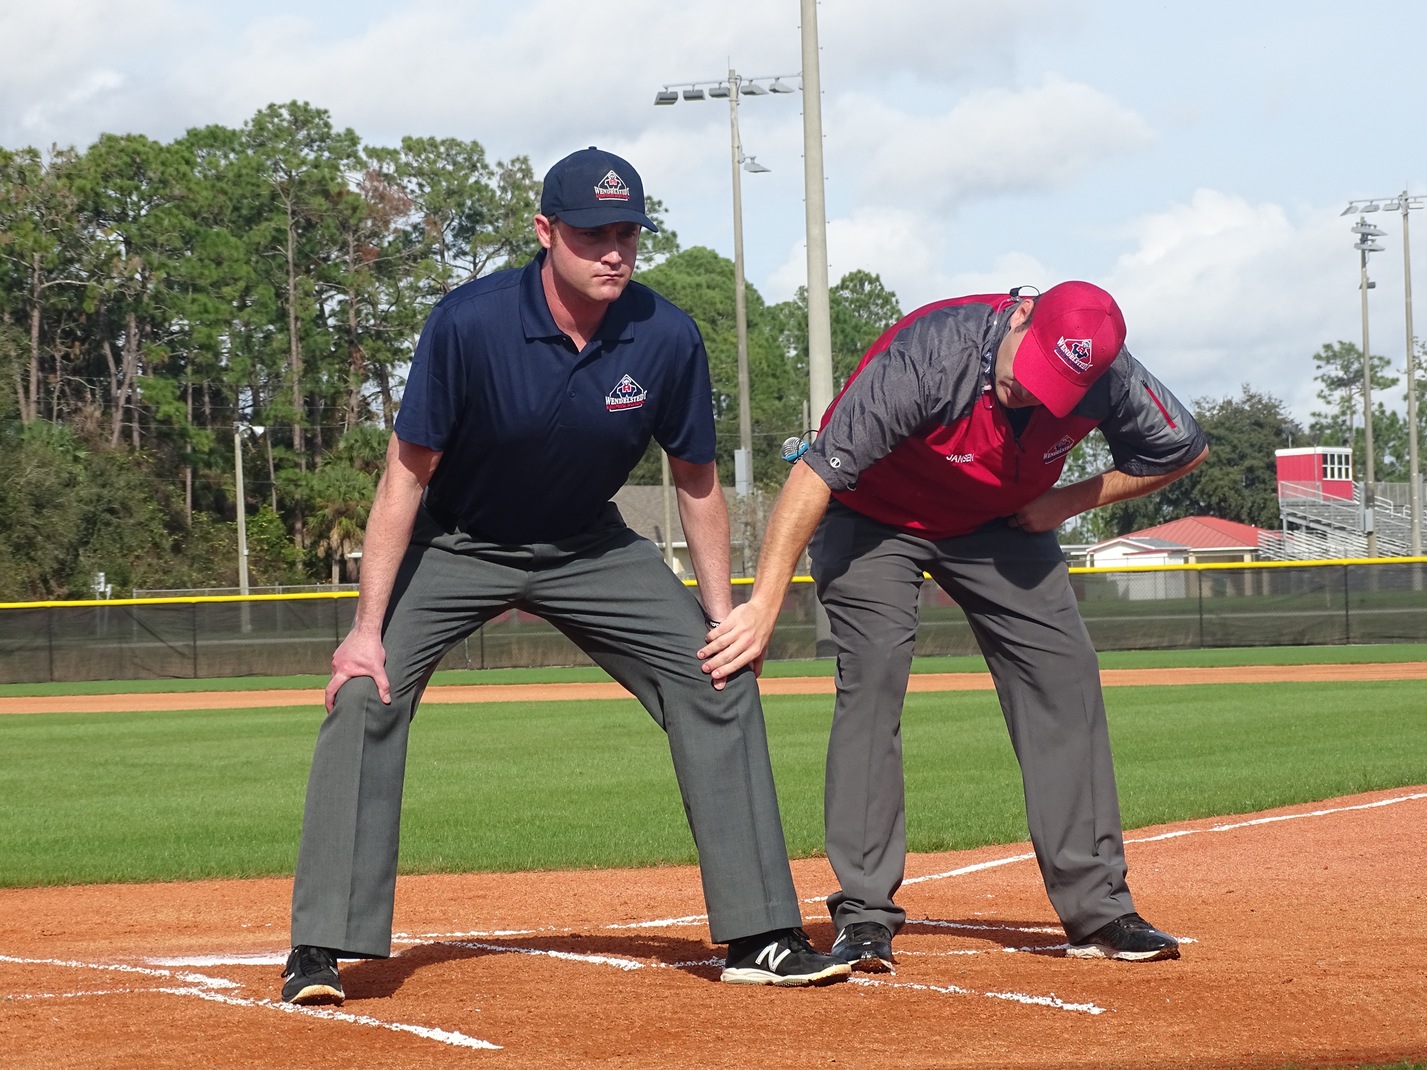 MLB Umpire Camp attracts local hopefuls